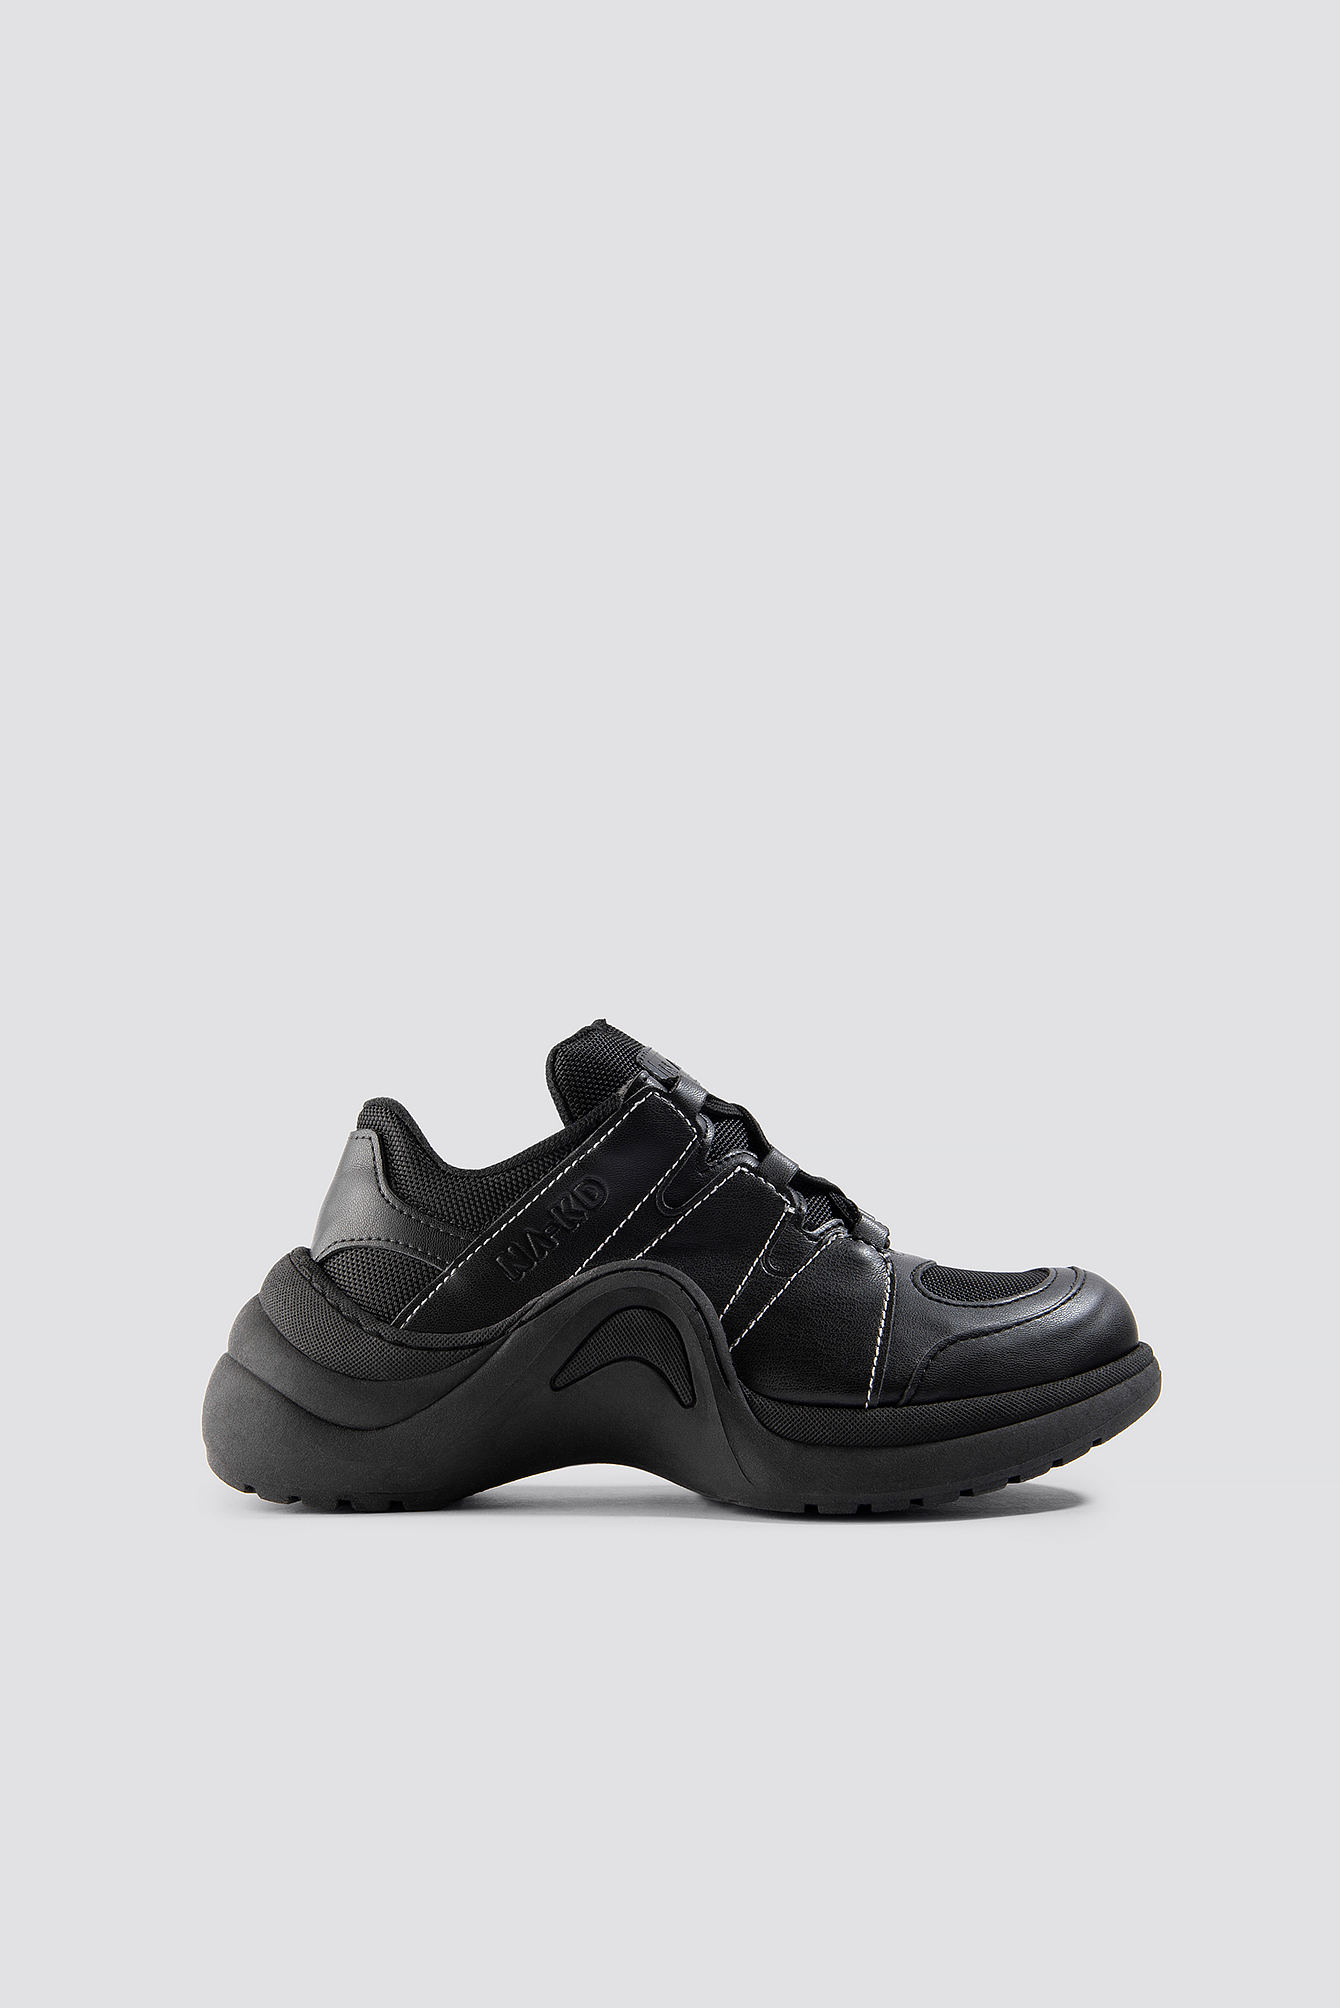 black white sole trainers